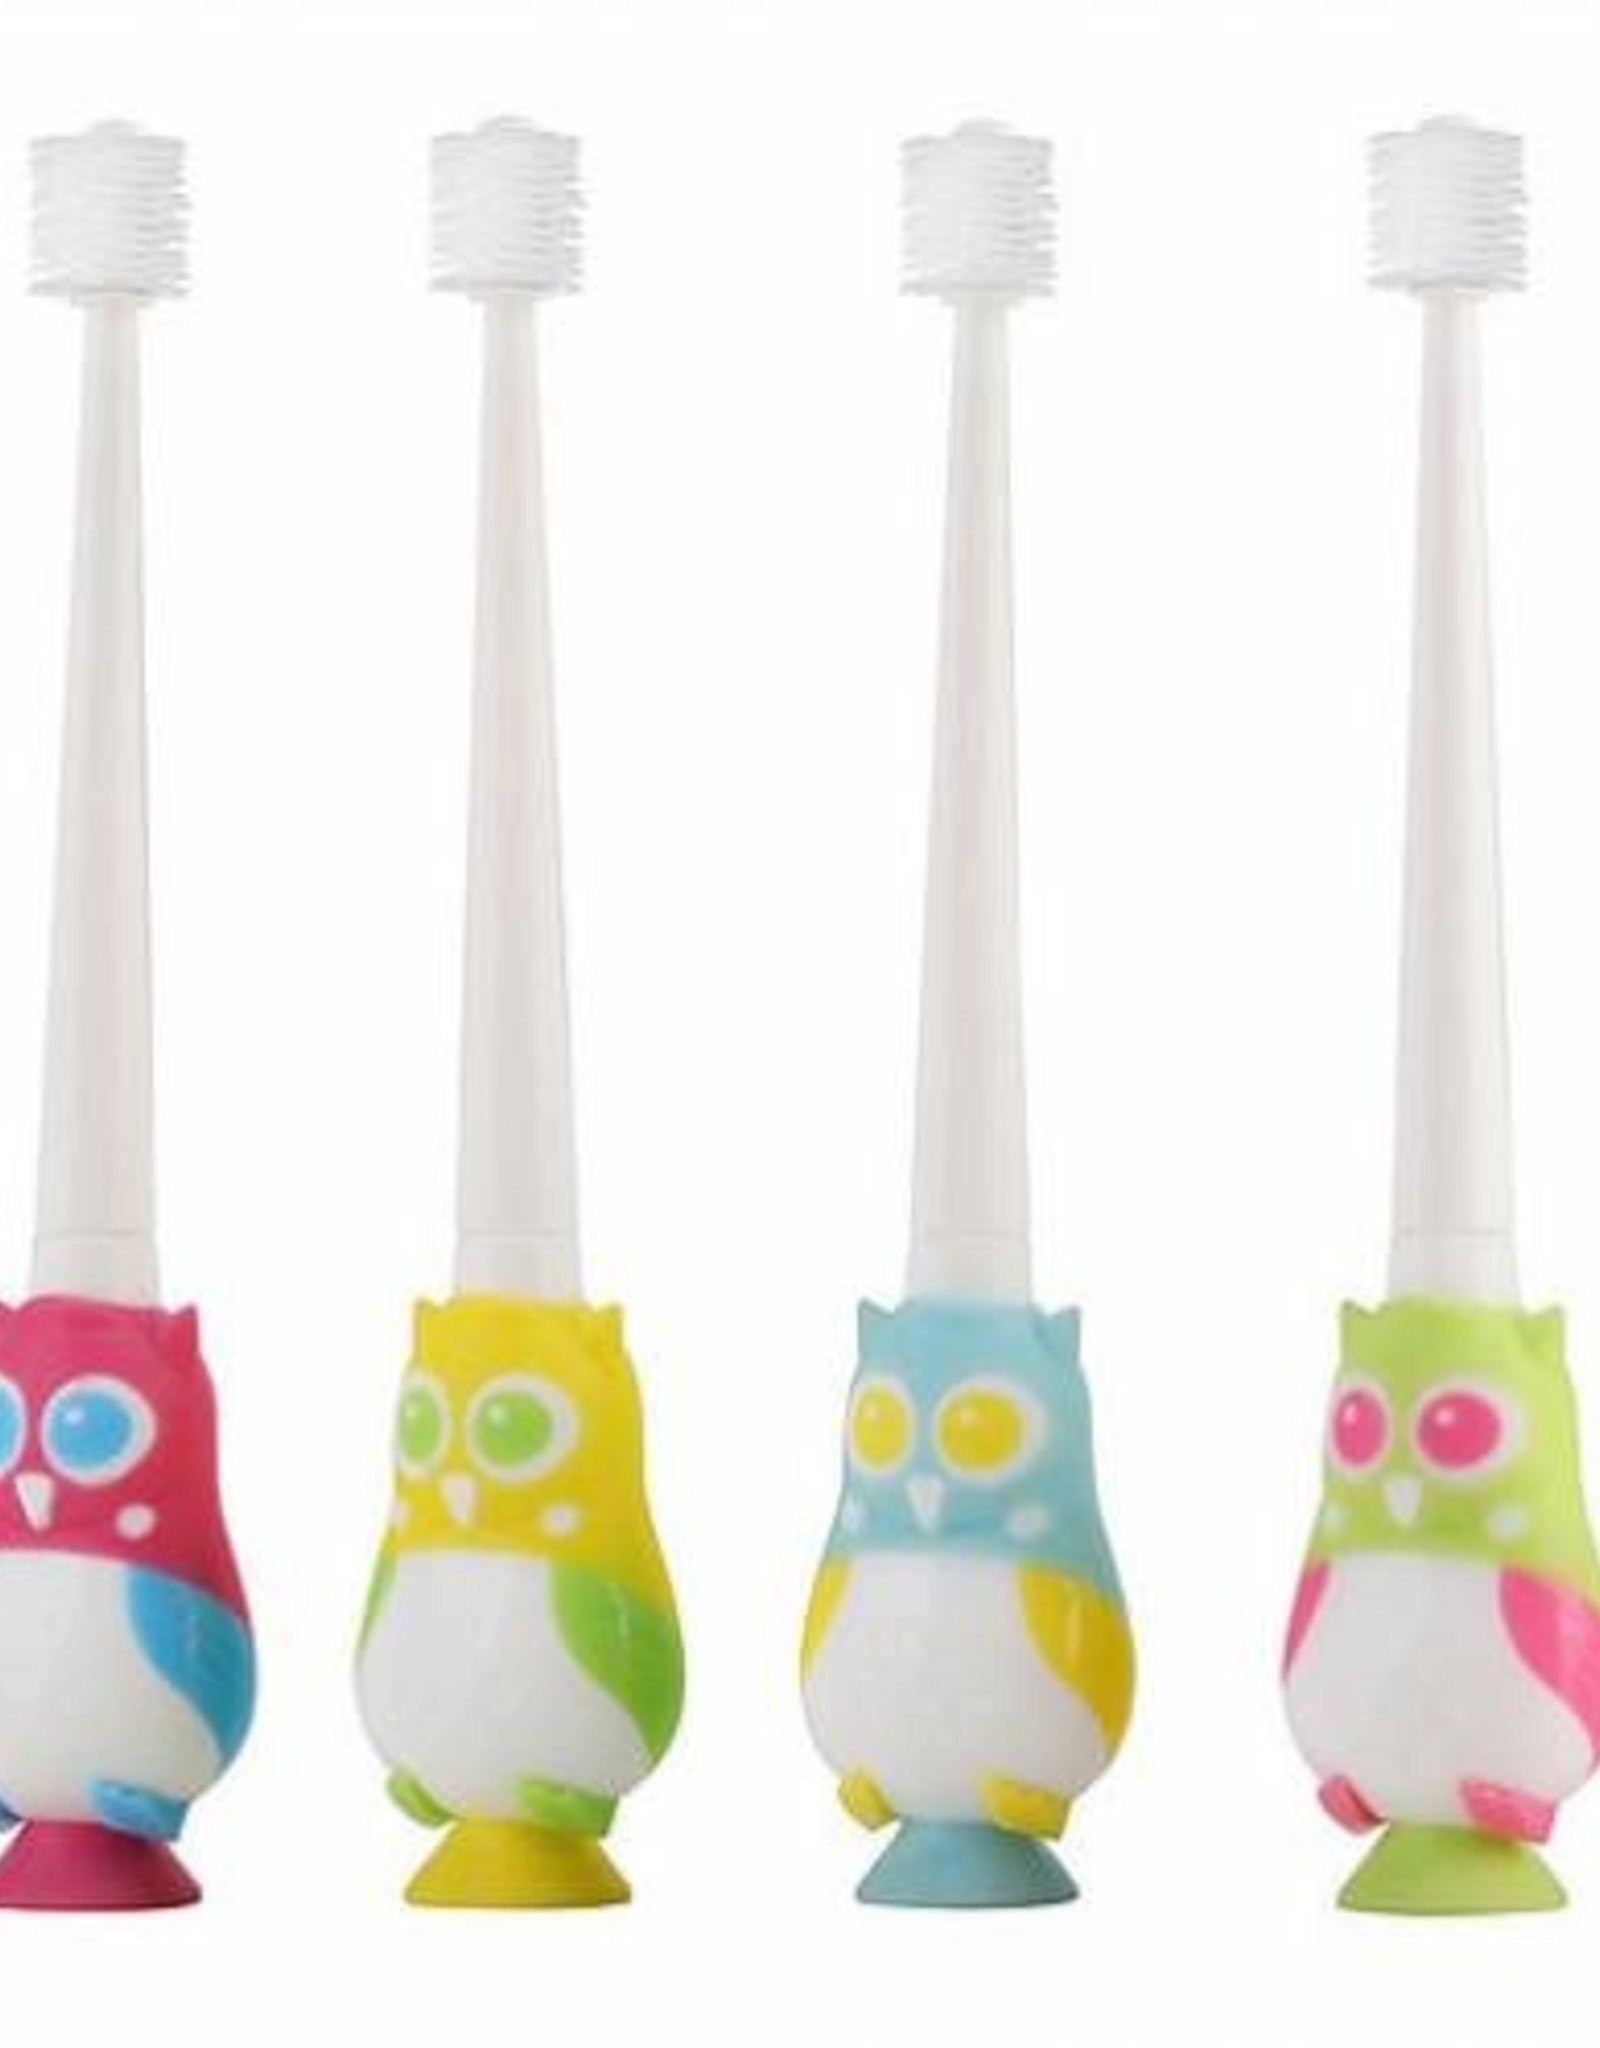 Beloved Beloved - Owl the Fun Toothbrush